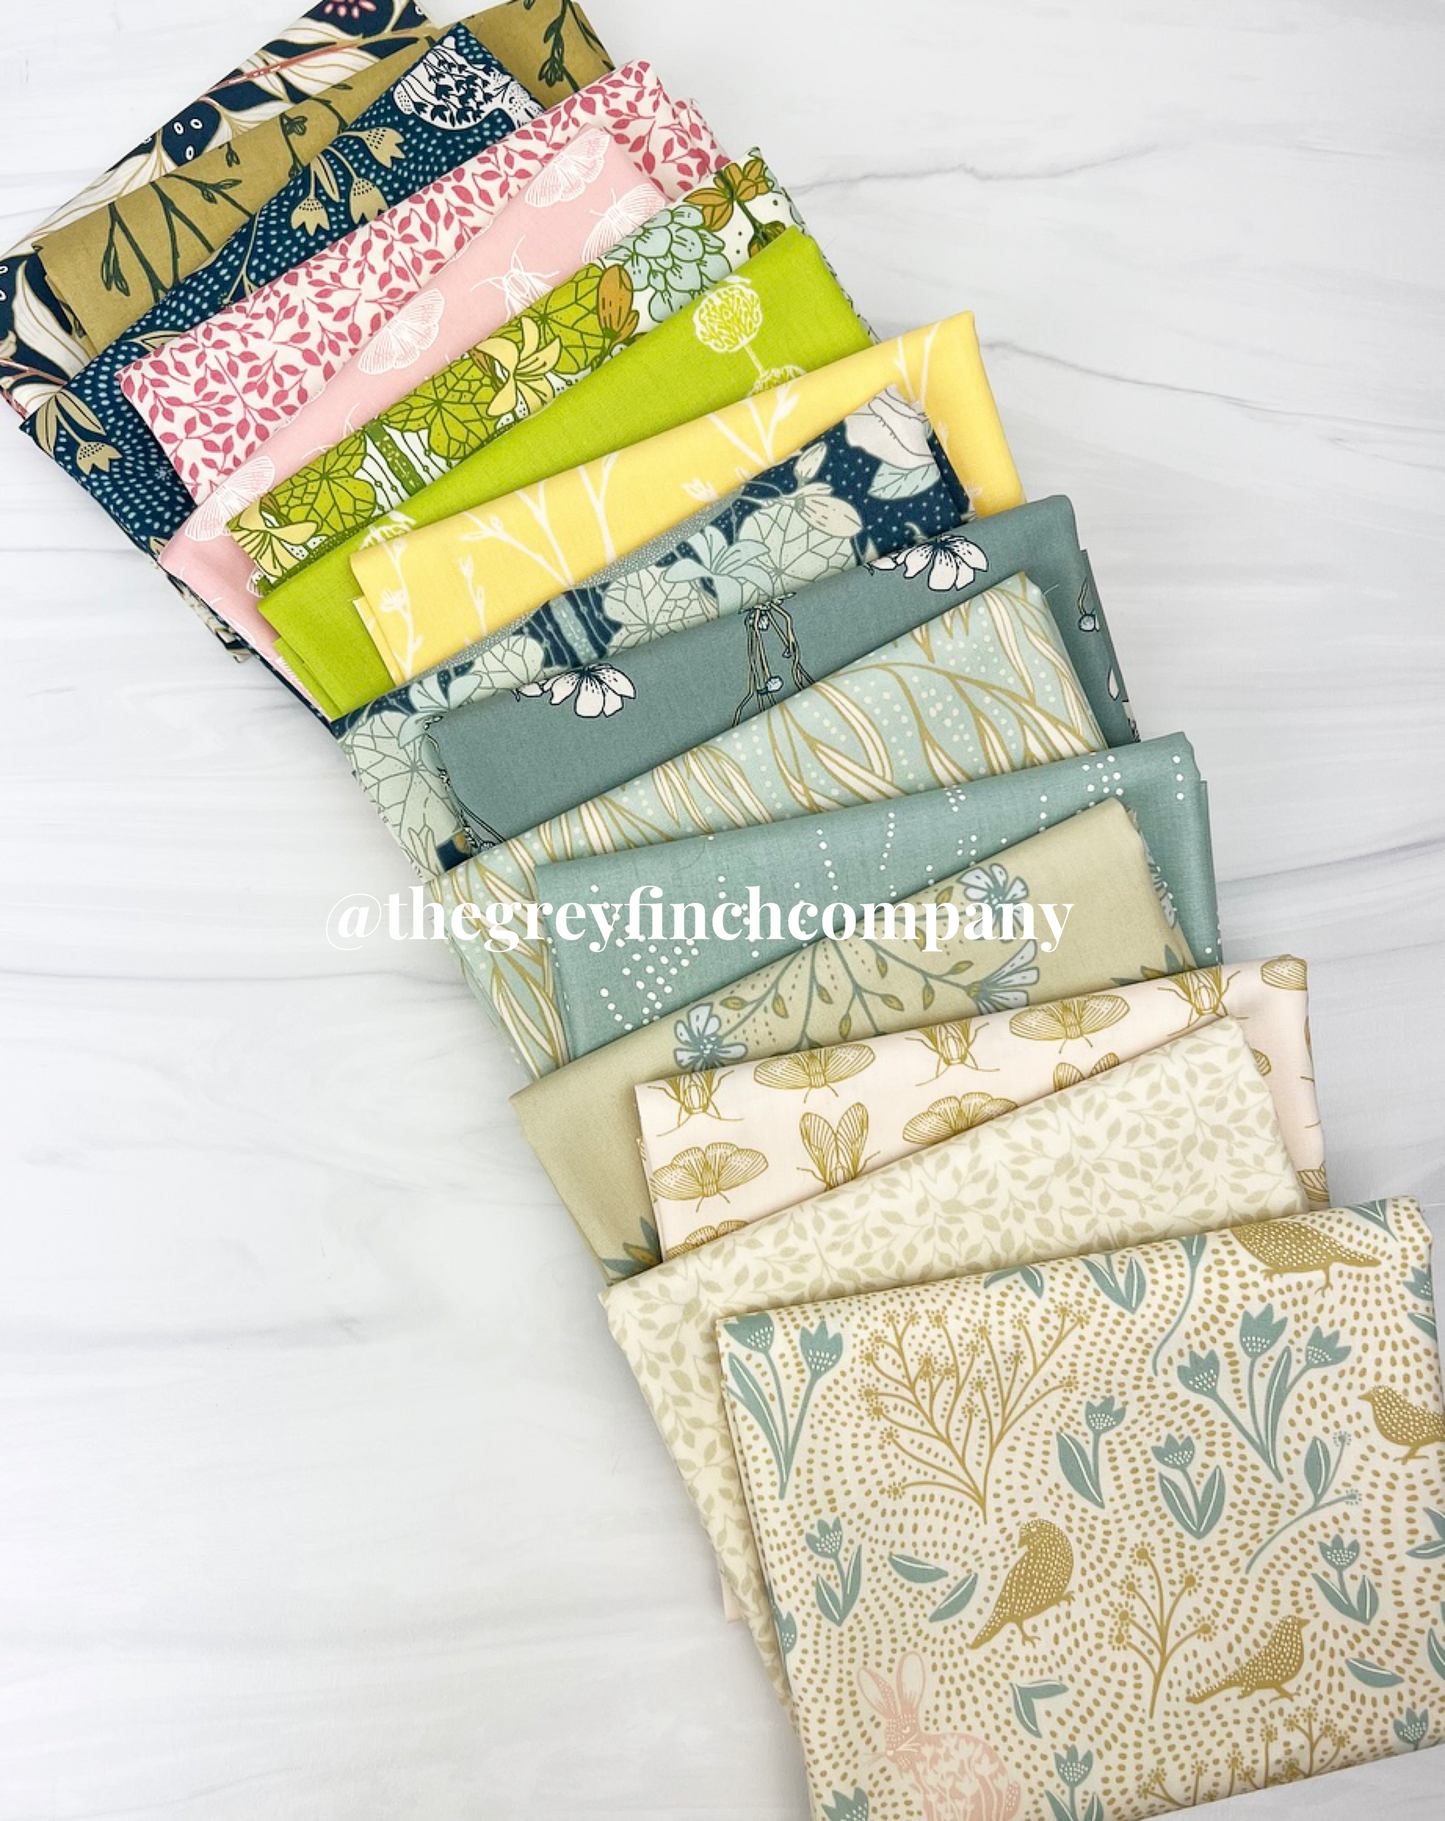 Spring Equinox Collection Bundle - 16 fabrics by Katie O’Shea - Art Gallery Fabrics